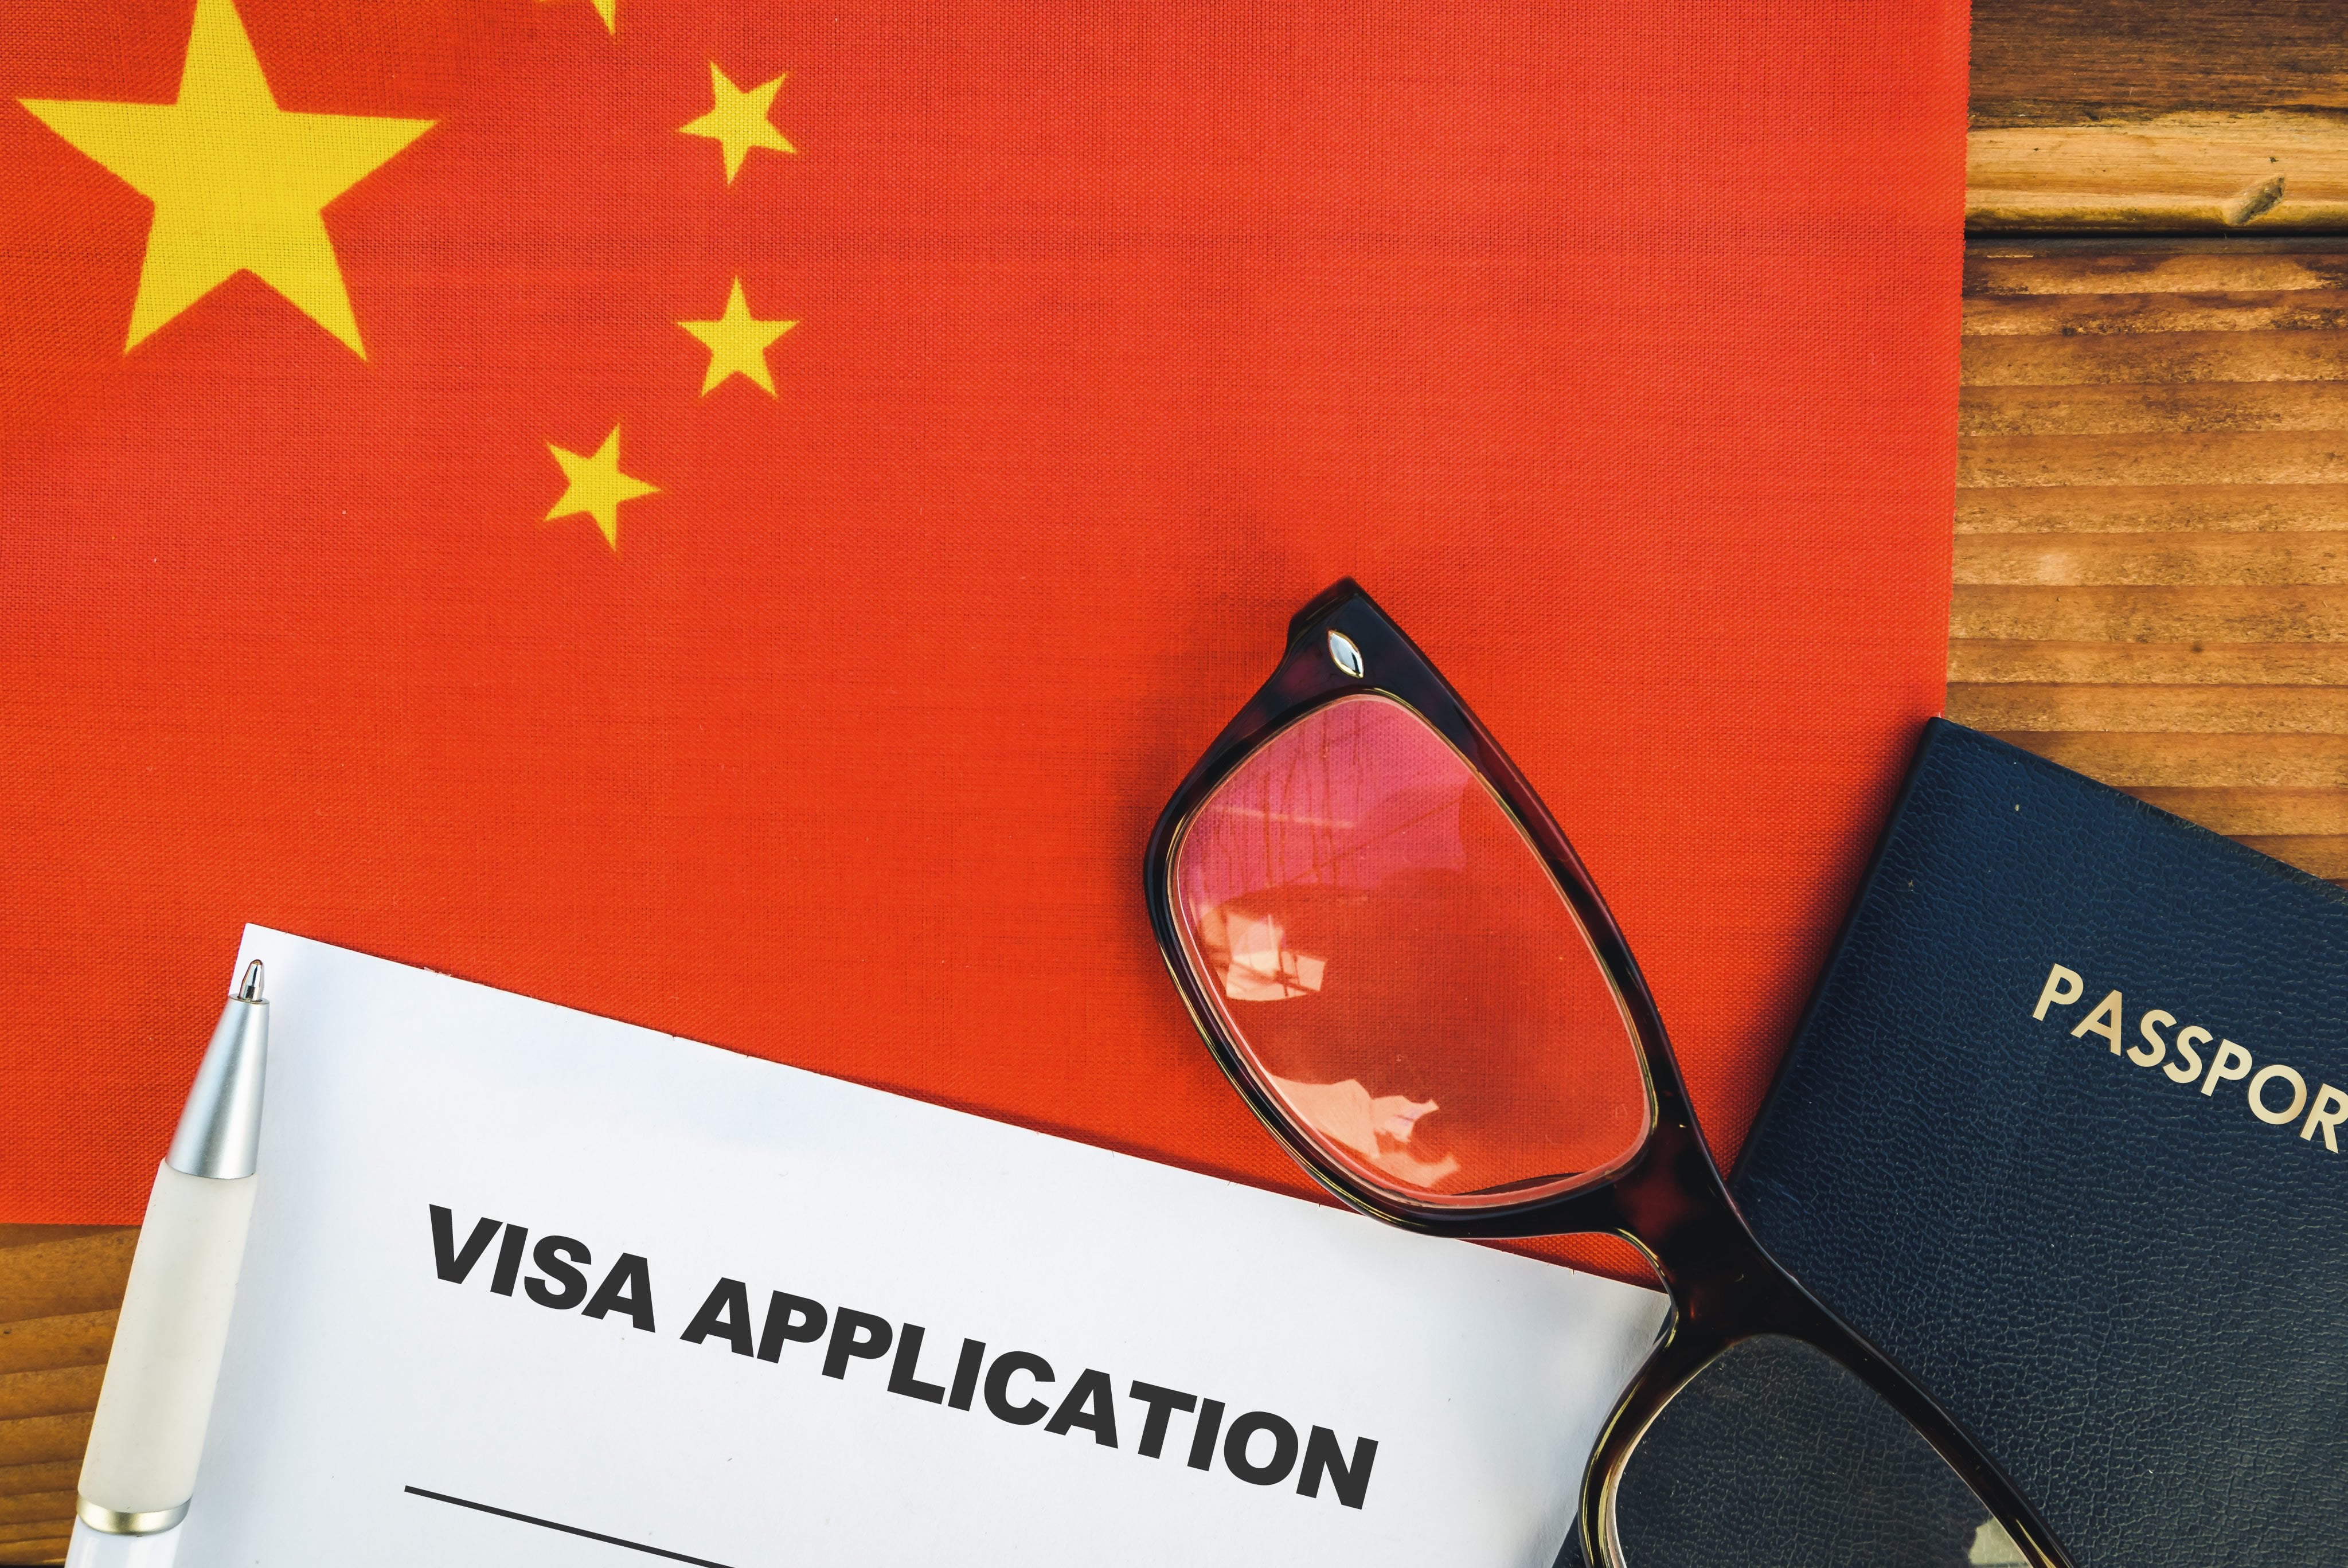 A visa application alongside glasses and a passport